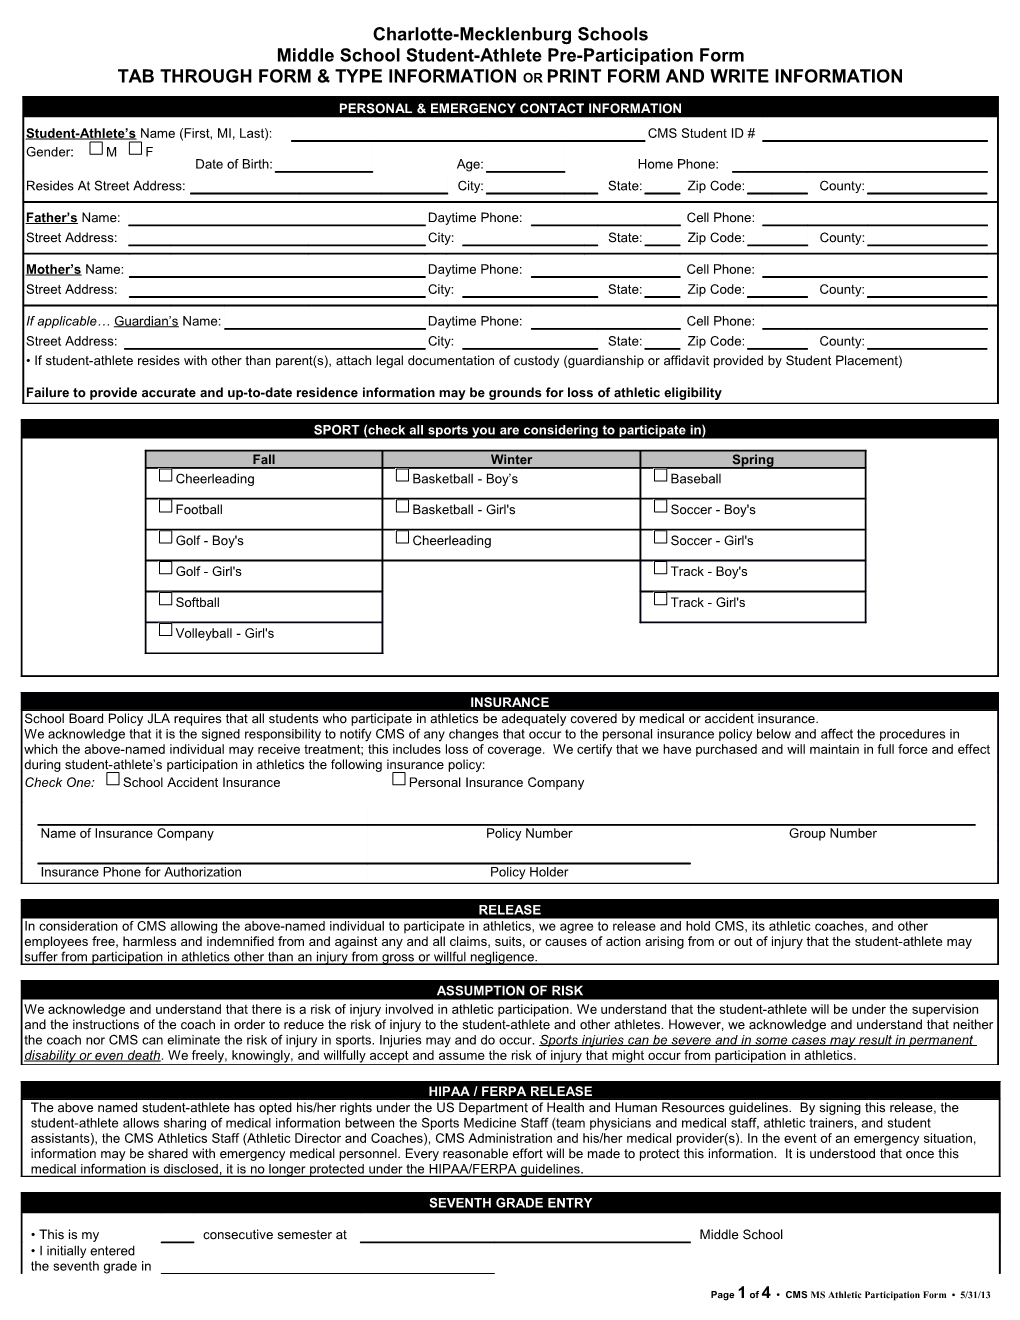 CMS MS Athletic Participation Form